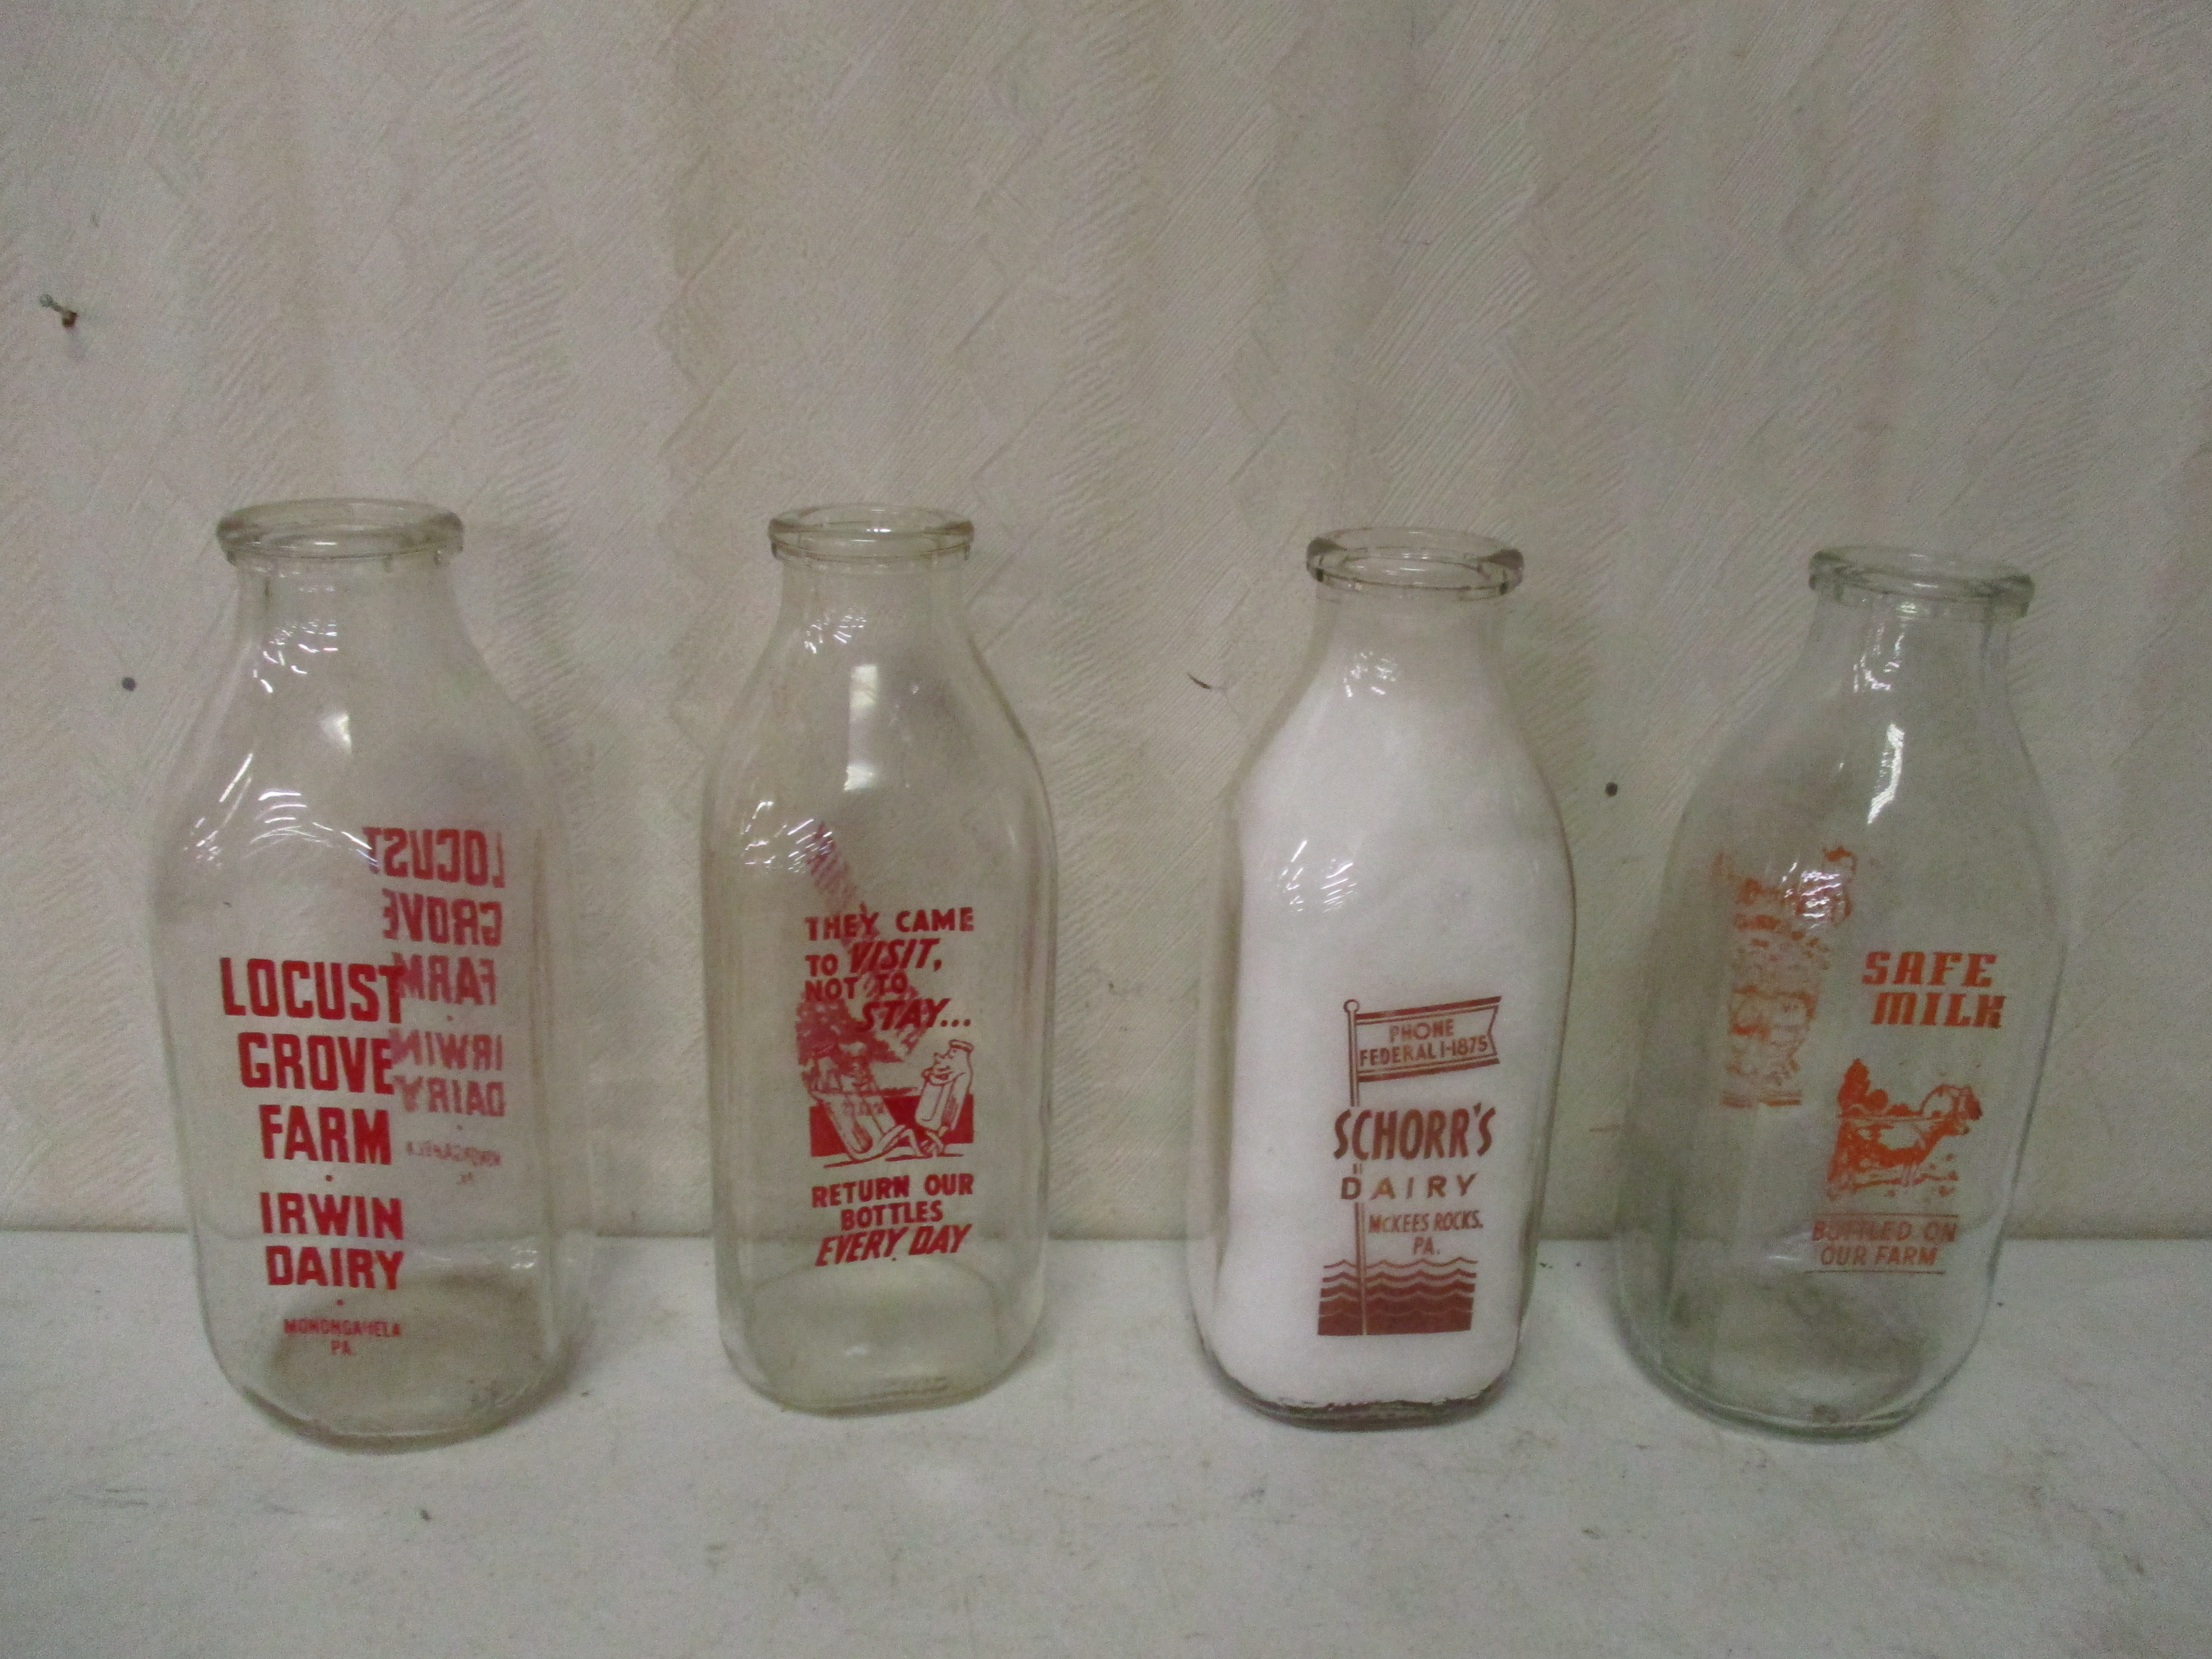 Lot 222: (4) Milk Bottles - Locust Grove (Irwin), Ayrshire (St Mary's), Schorr's (McKee's Rocks) And Edgewood